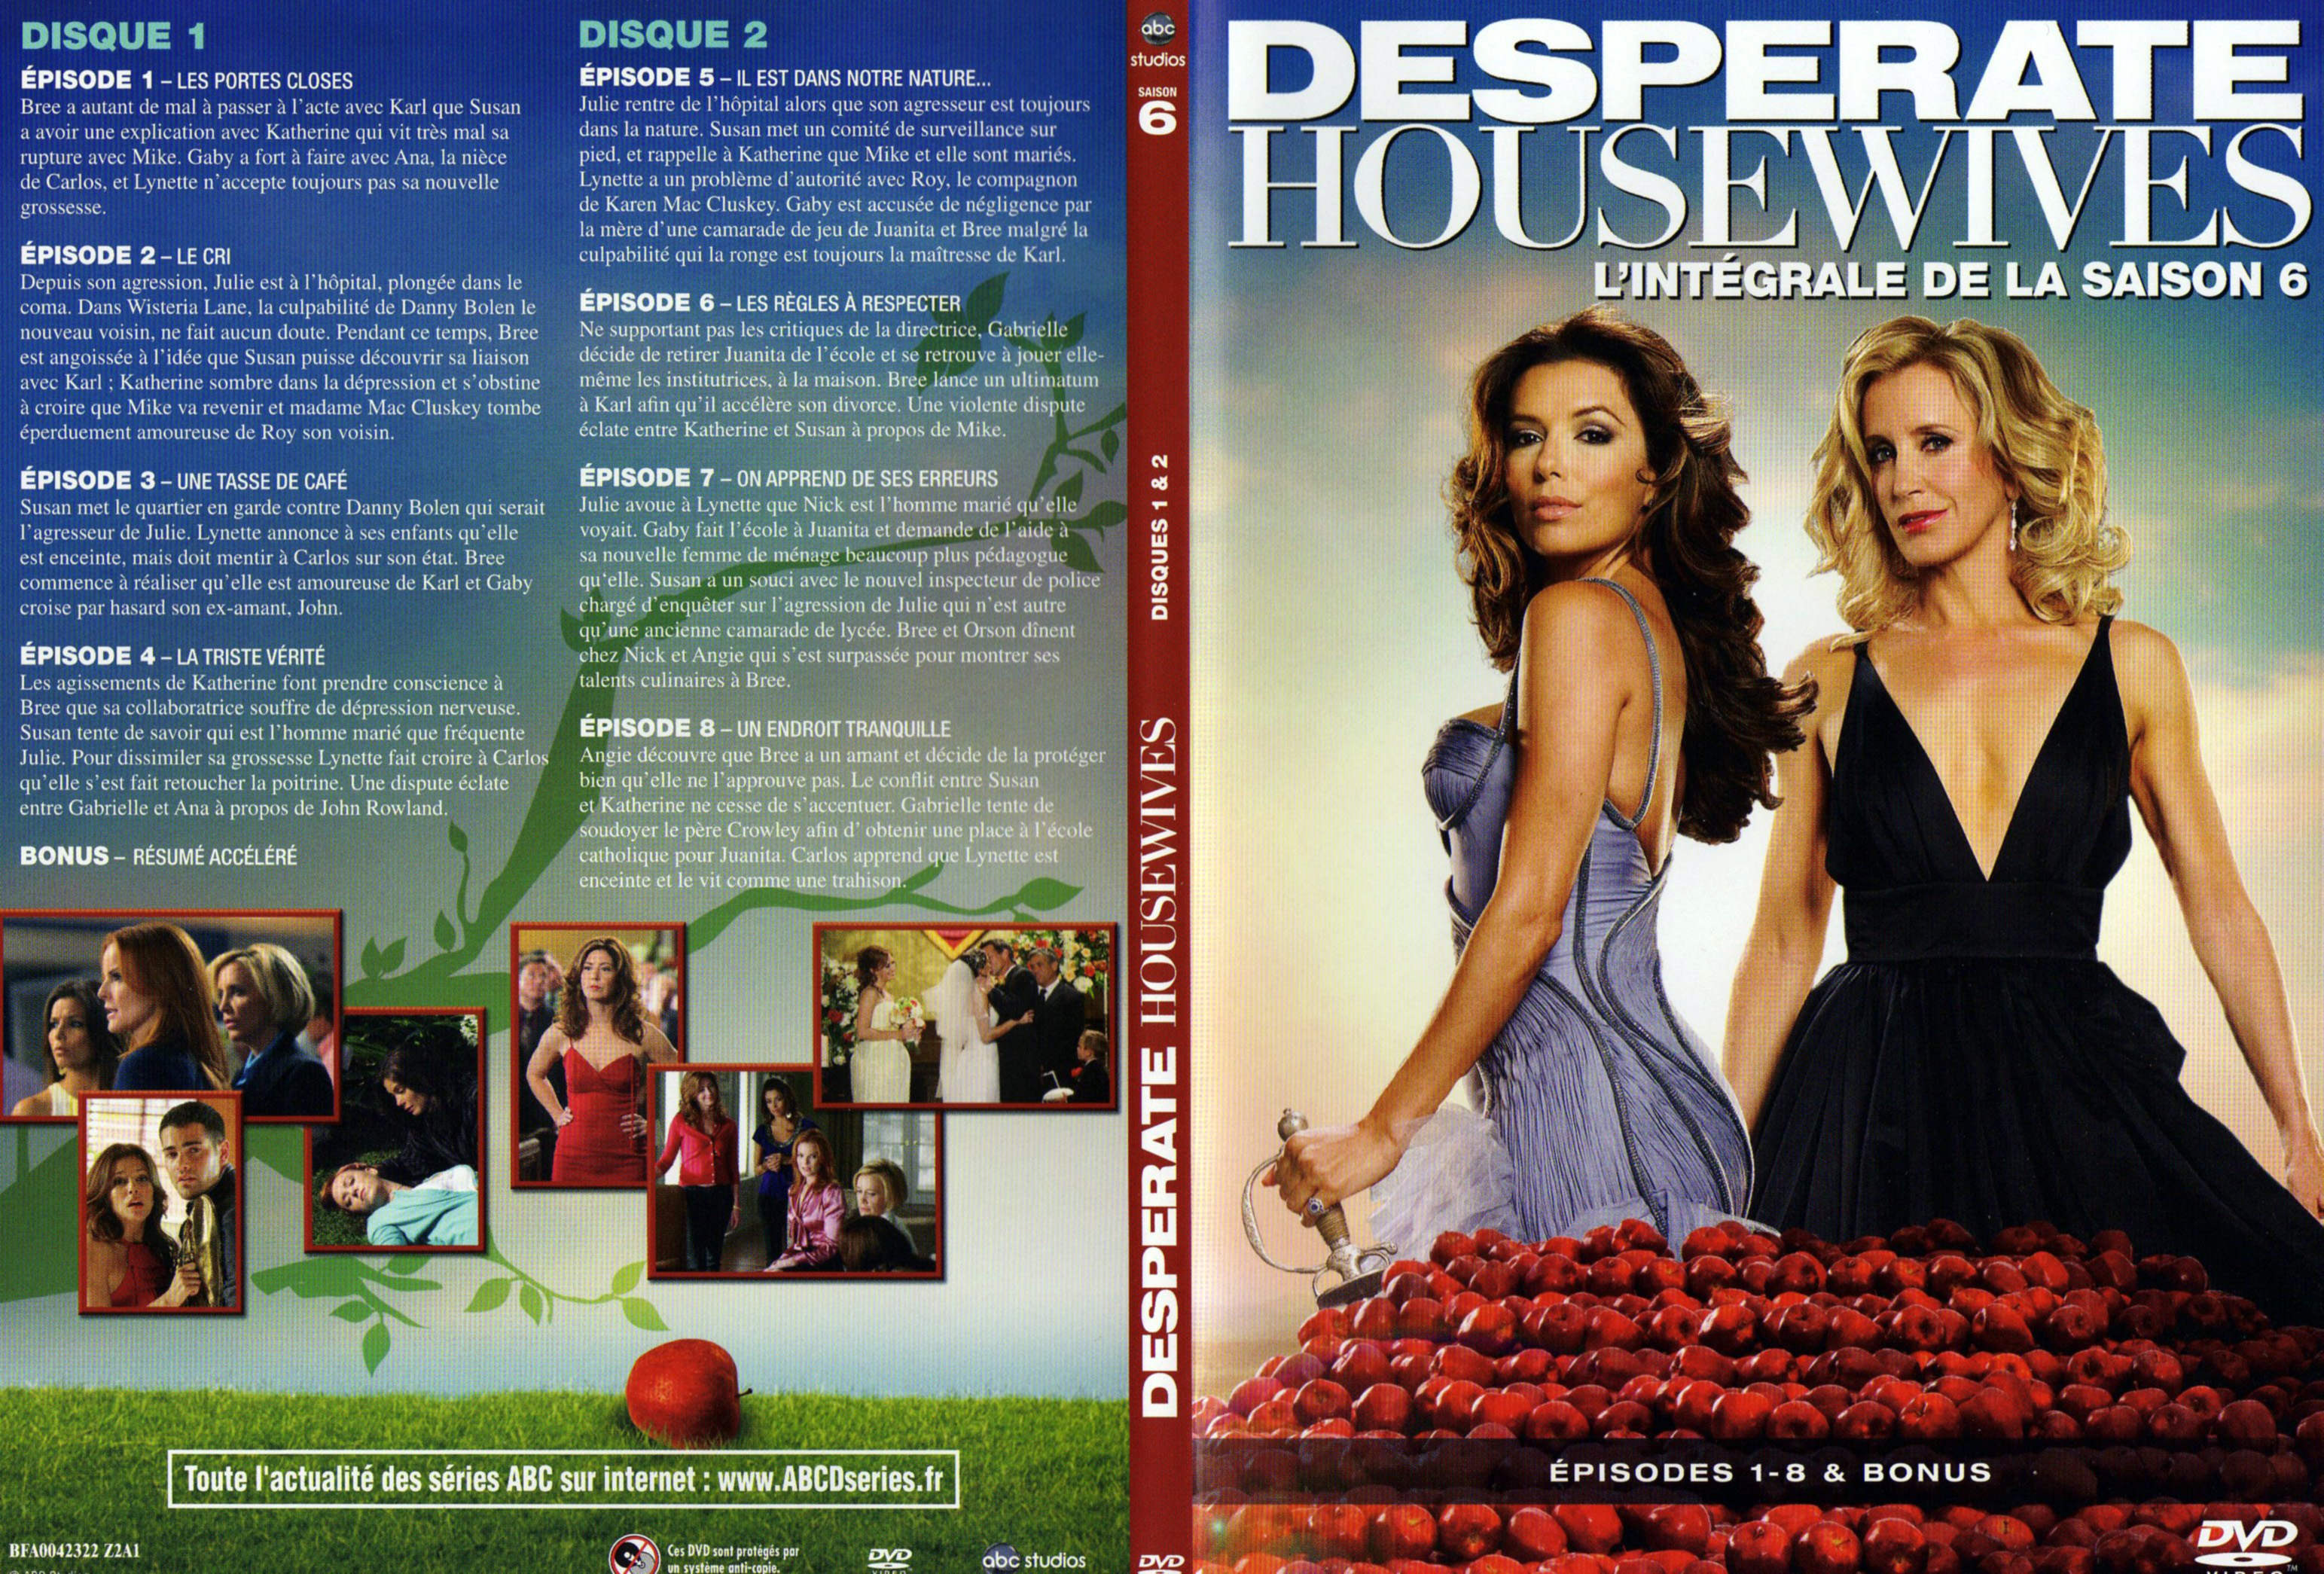 Jaquette DVD Desperate housewives Saison 6 DVD 1